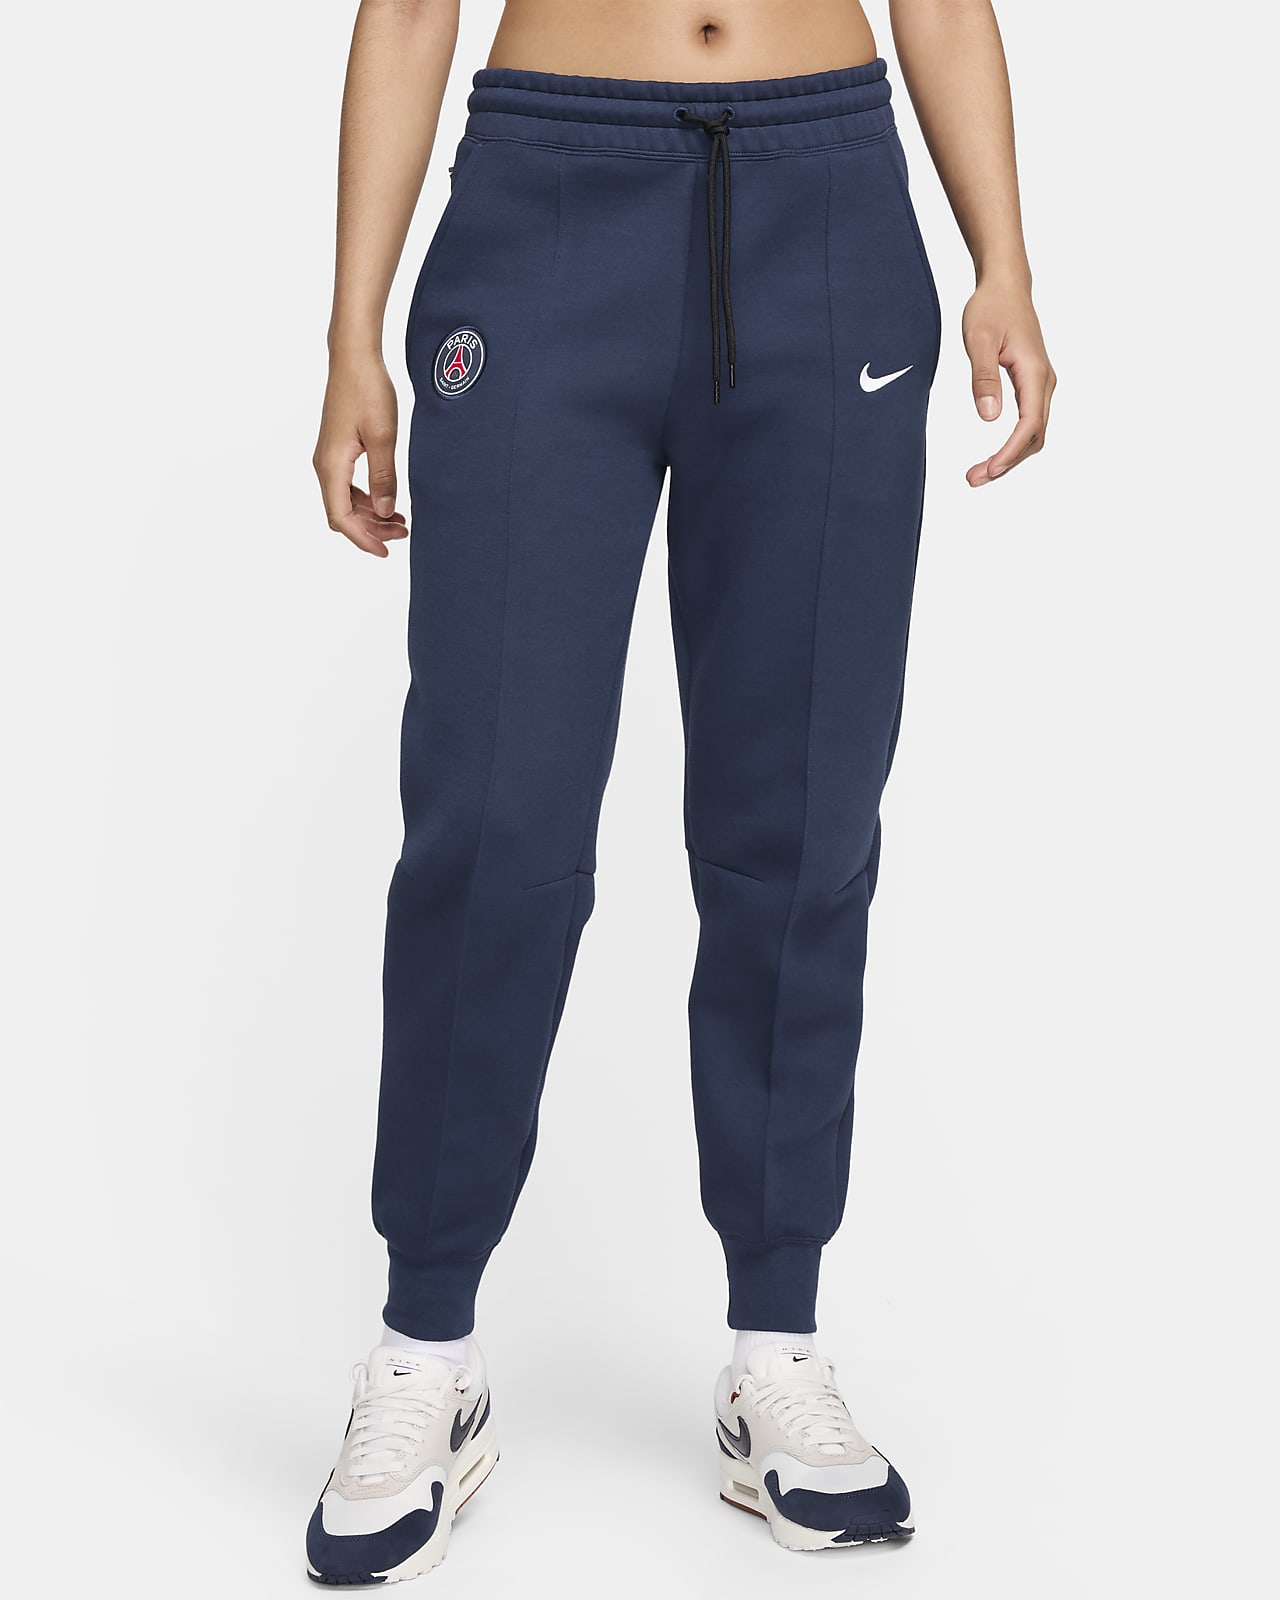 Calças desportivas de futebol de cintura normal Nike Tech Fleece Paris Saint-Germain para mulher